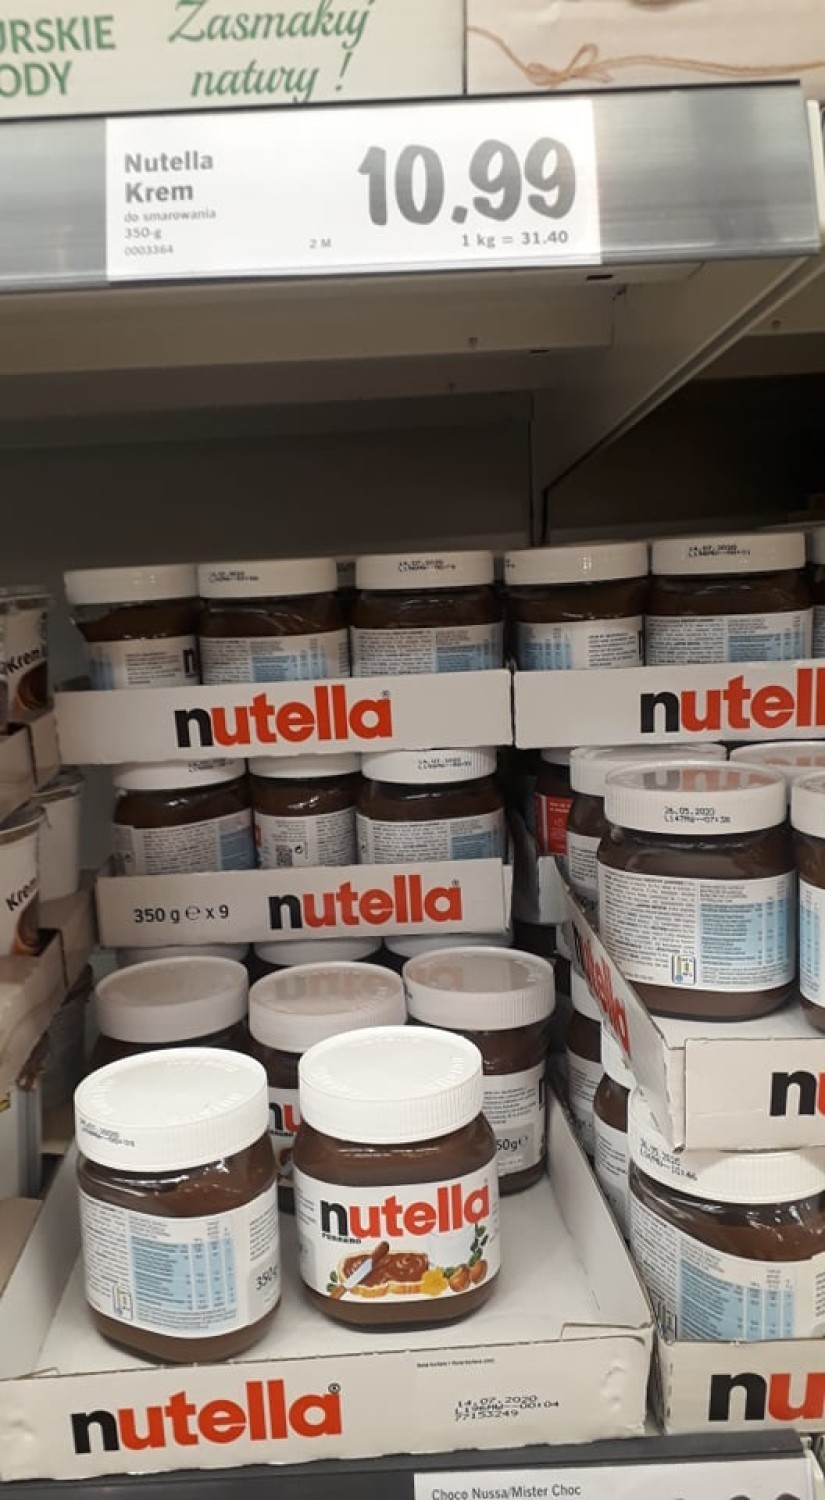 Nutella 350 g

DE 2,49 euro (10,76 zł)
PL 10, 99 zł